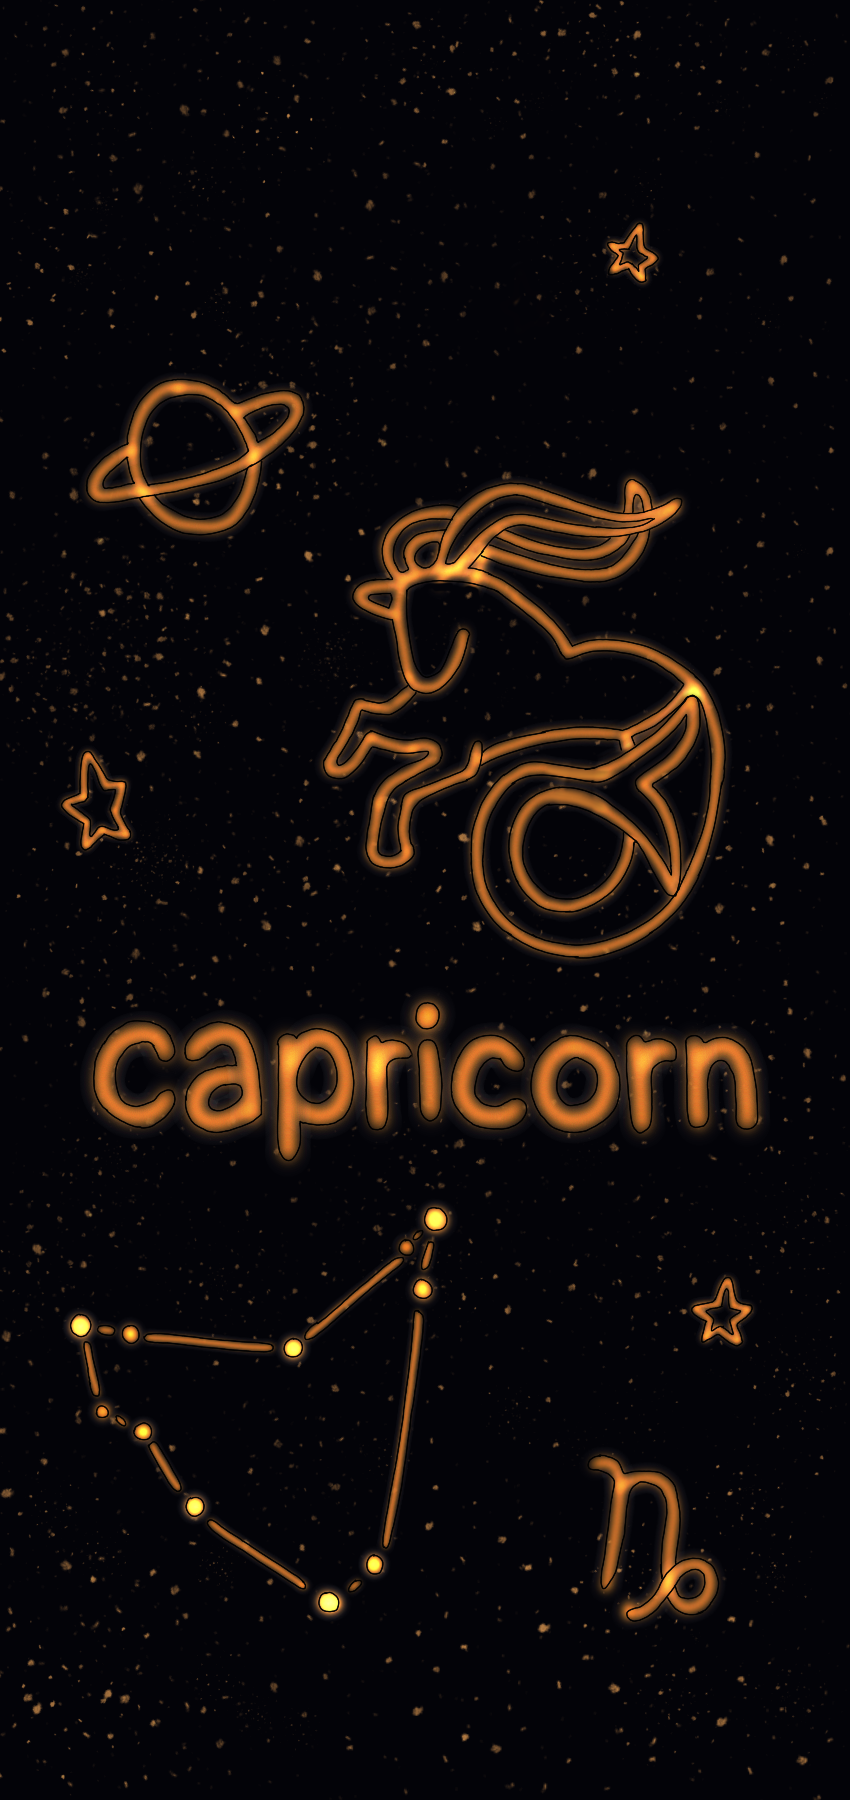 Capricorn Zodiac Sign Wallpaper iPhone. Capricorn constellation tattoo, Capricorn aesthetic, Capricorn constellation